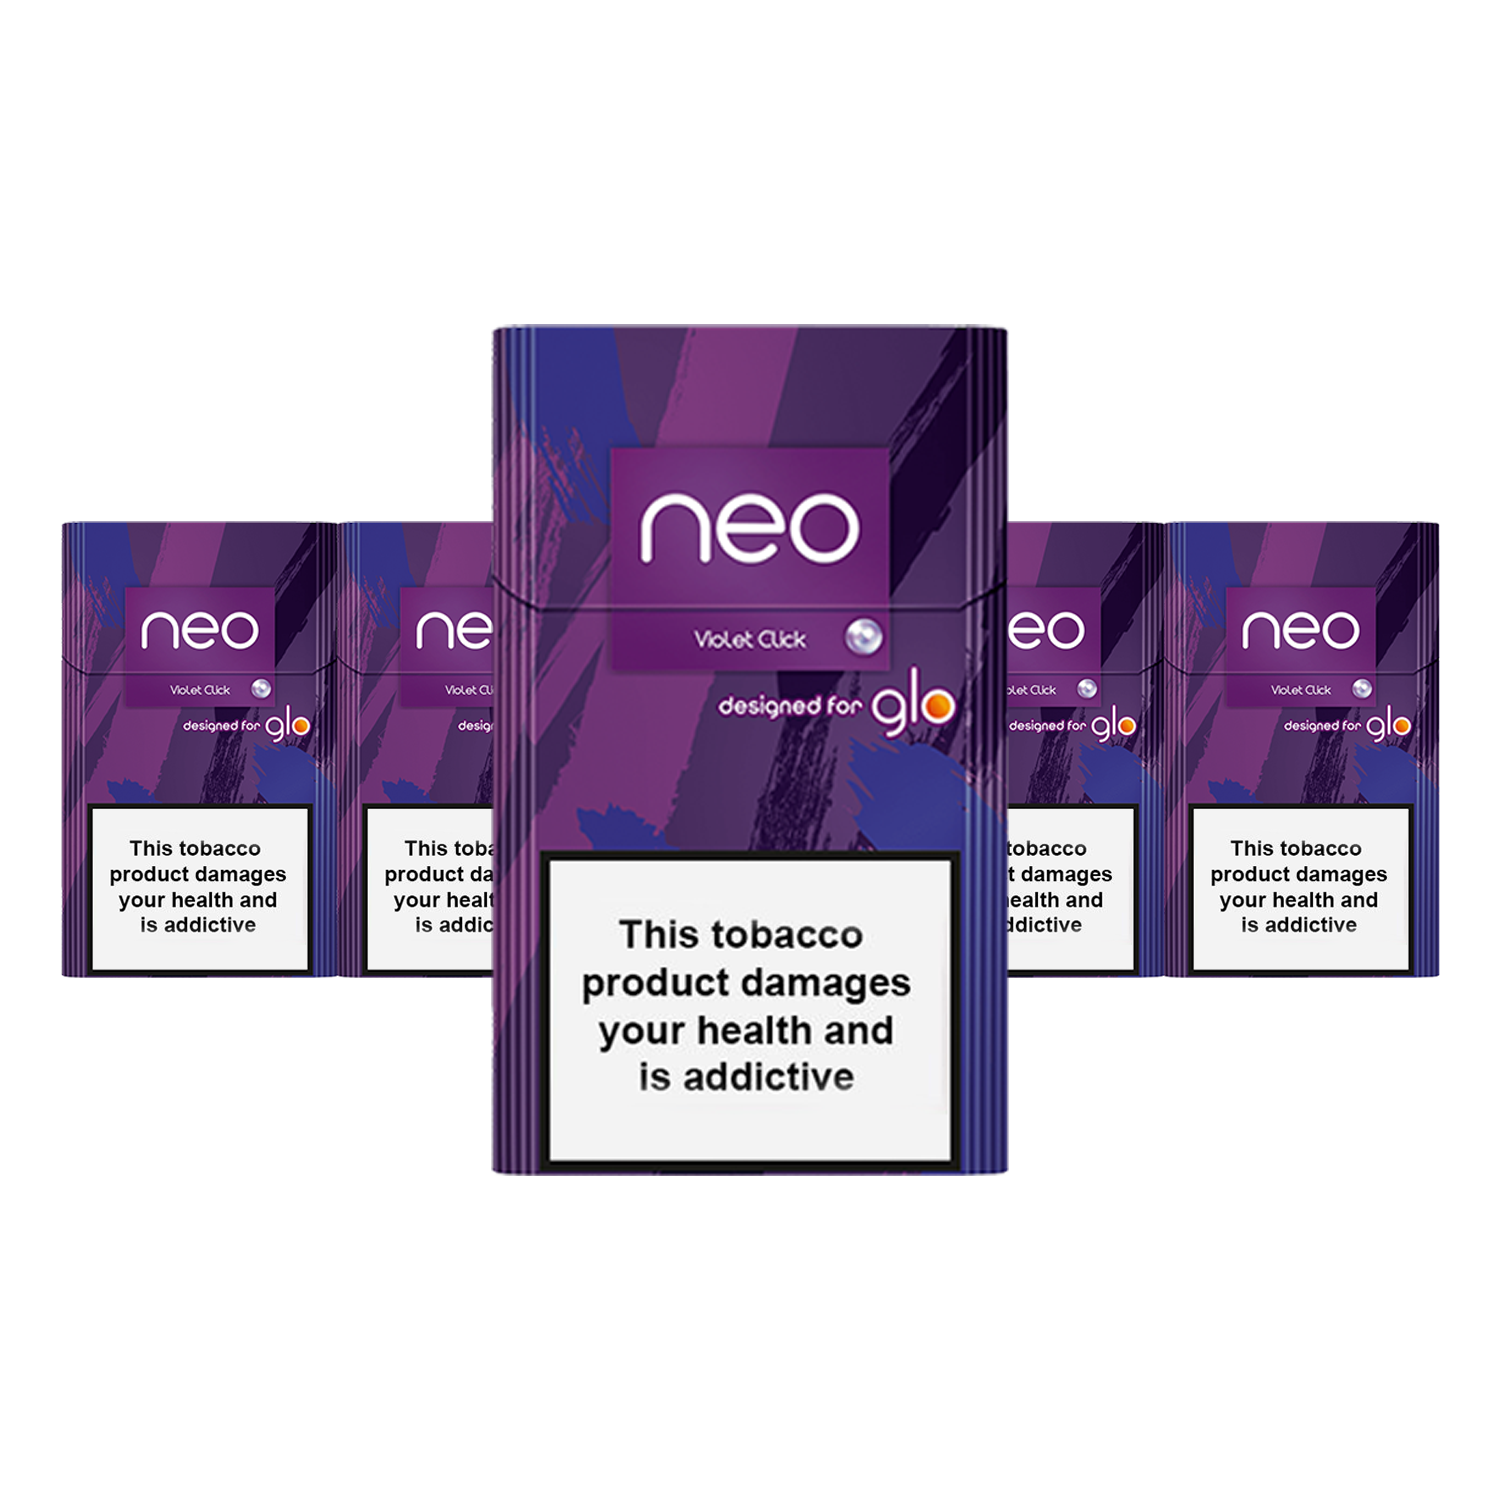 NEO Sticks Violet Click for GLO - Buy online